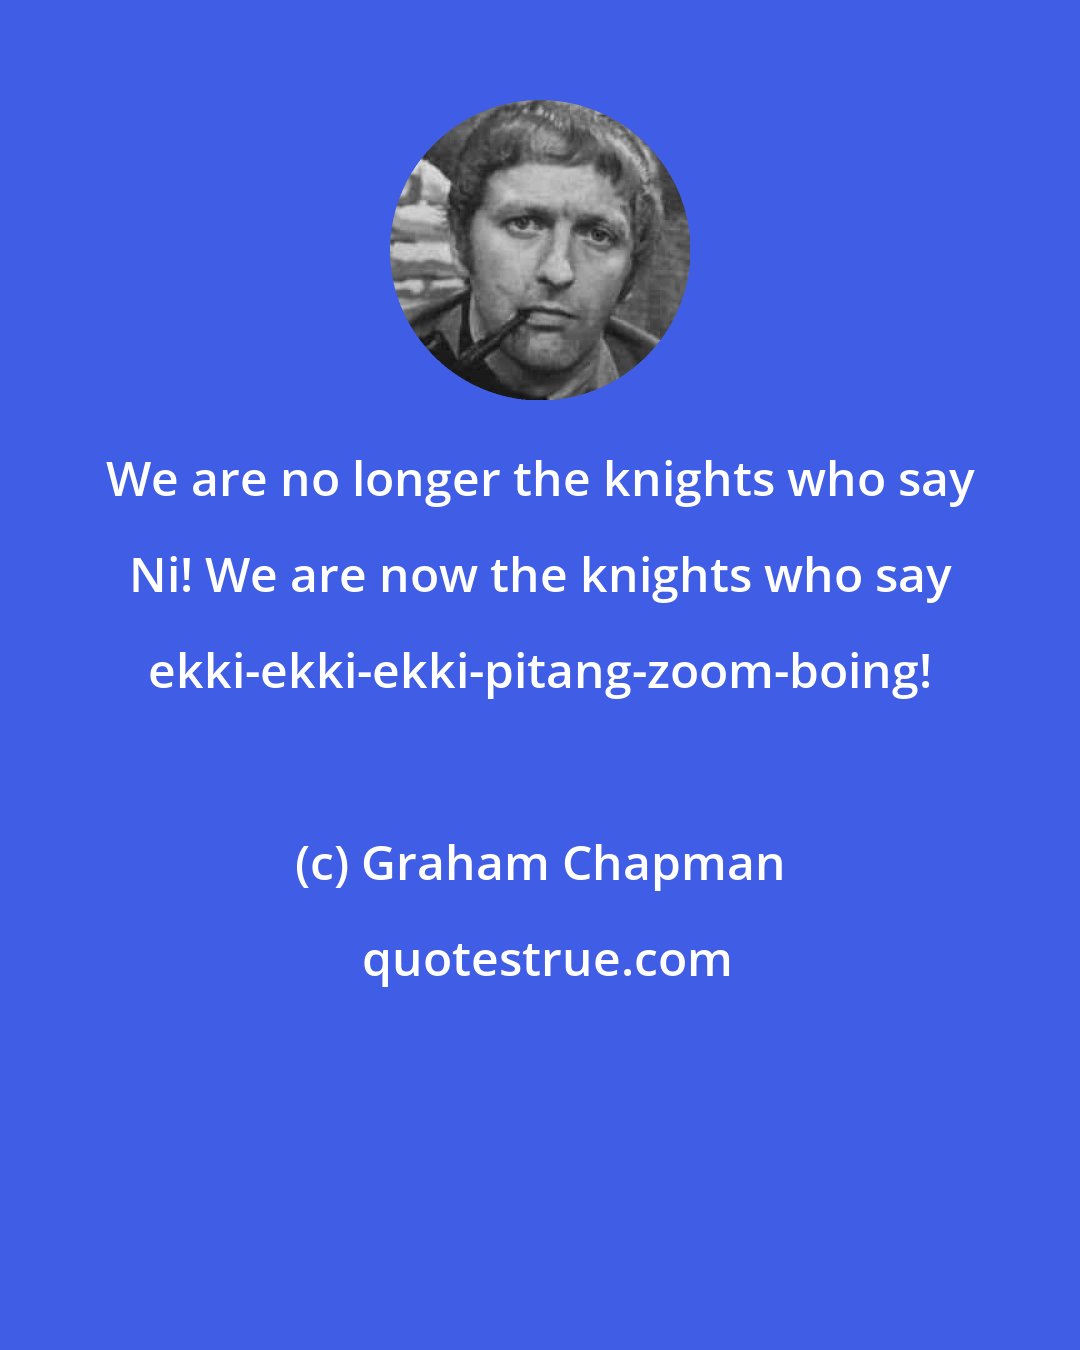 Graham Chapman: We are no longer the knights who say Ni! We are now the knights who say ekki-ekki-ekki-pitang-zoom-boing!